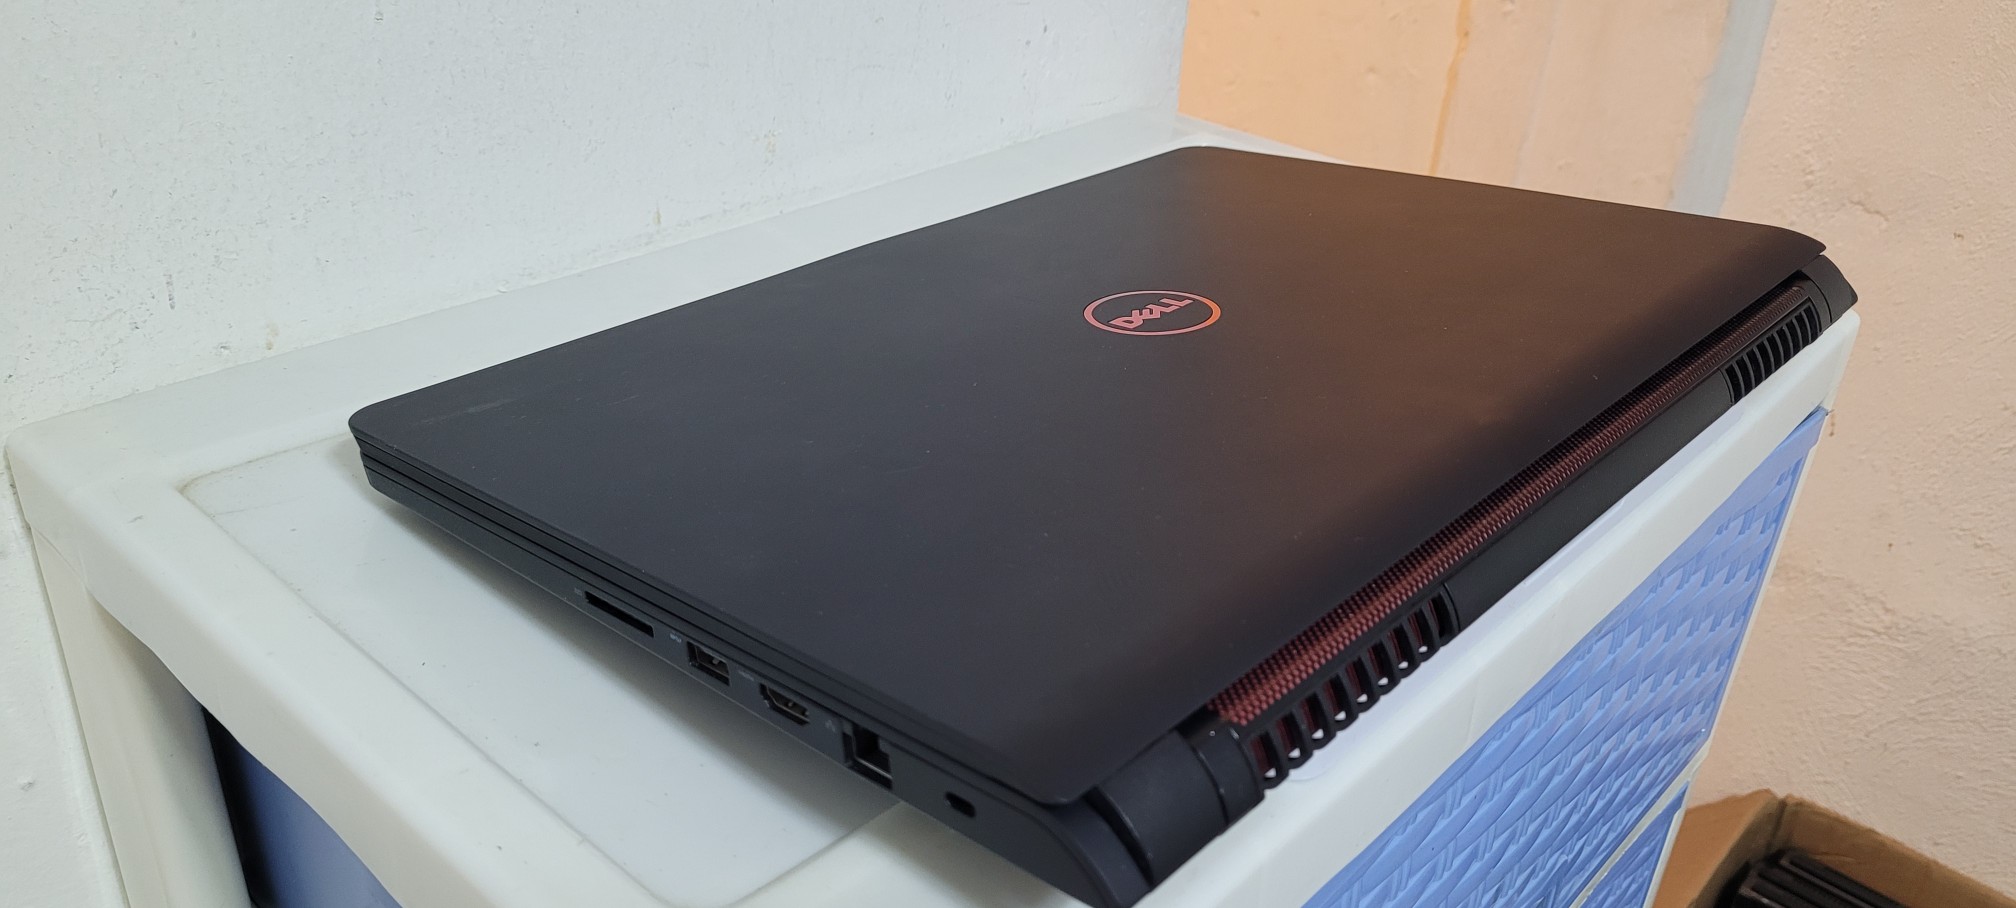 computadoras y laptops - Dell Inspiron de 17 Pulg Core i7 Ram 16gb SSD 512gb Nvidea Gtx 960m 4gb 2